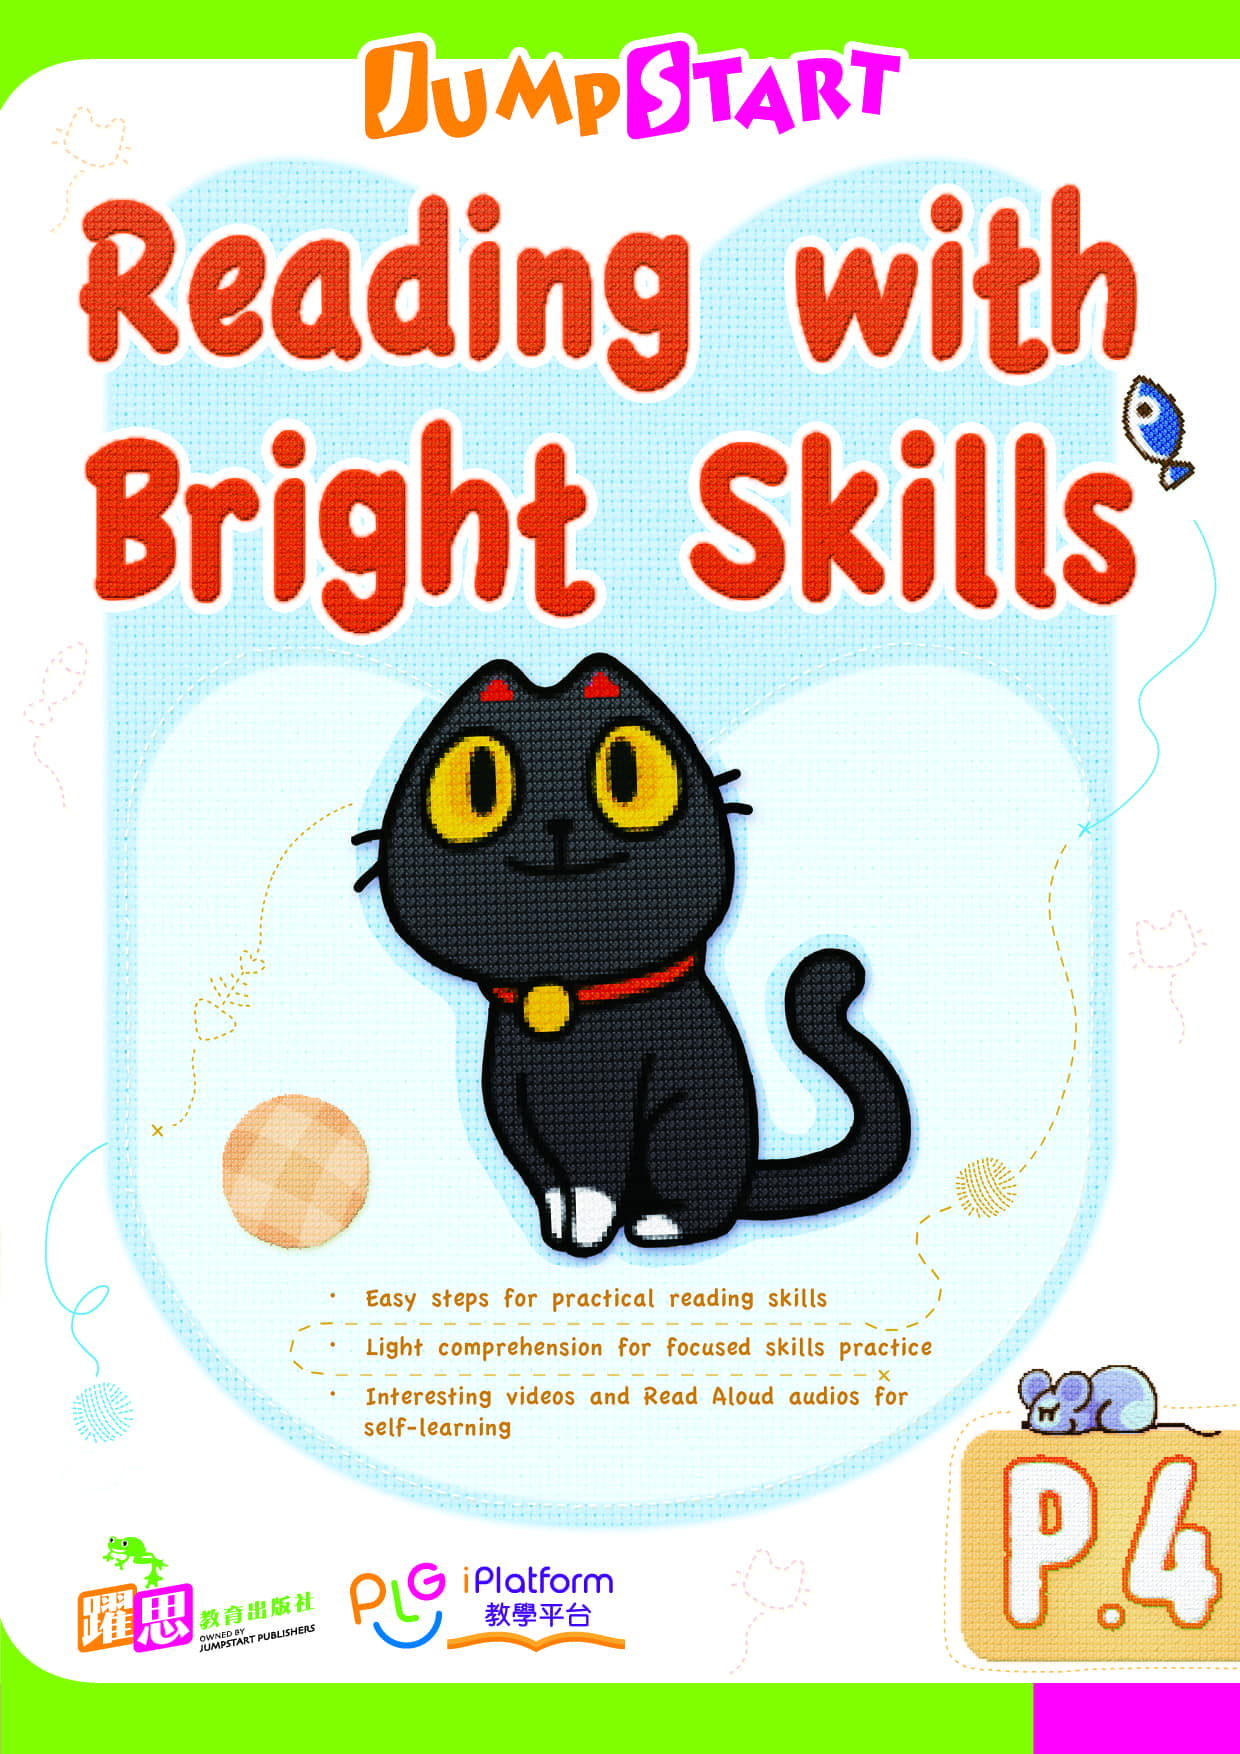 JumpStart Reading with Bright Skills